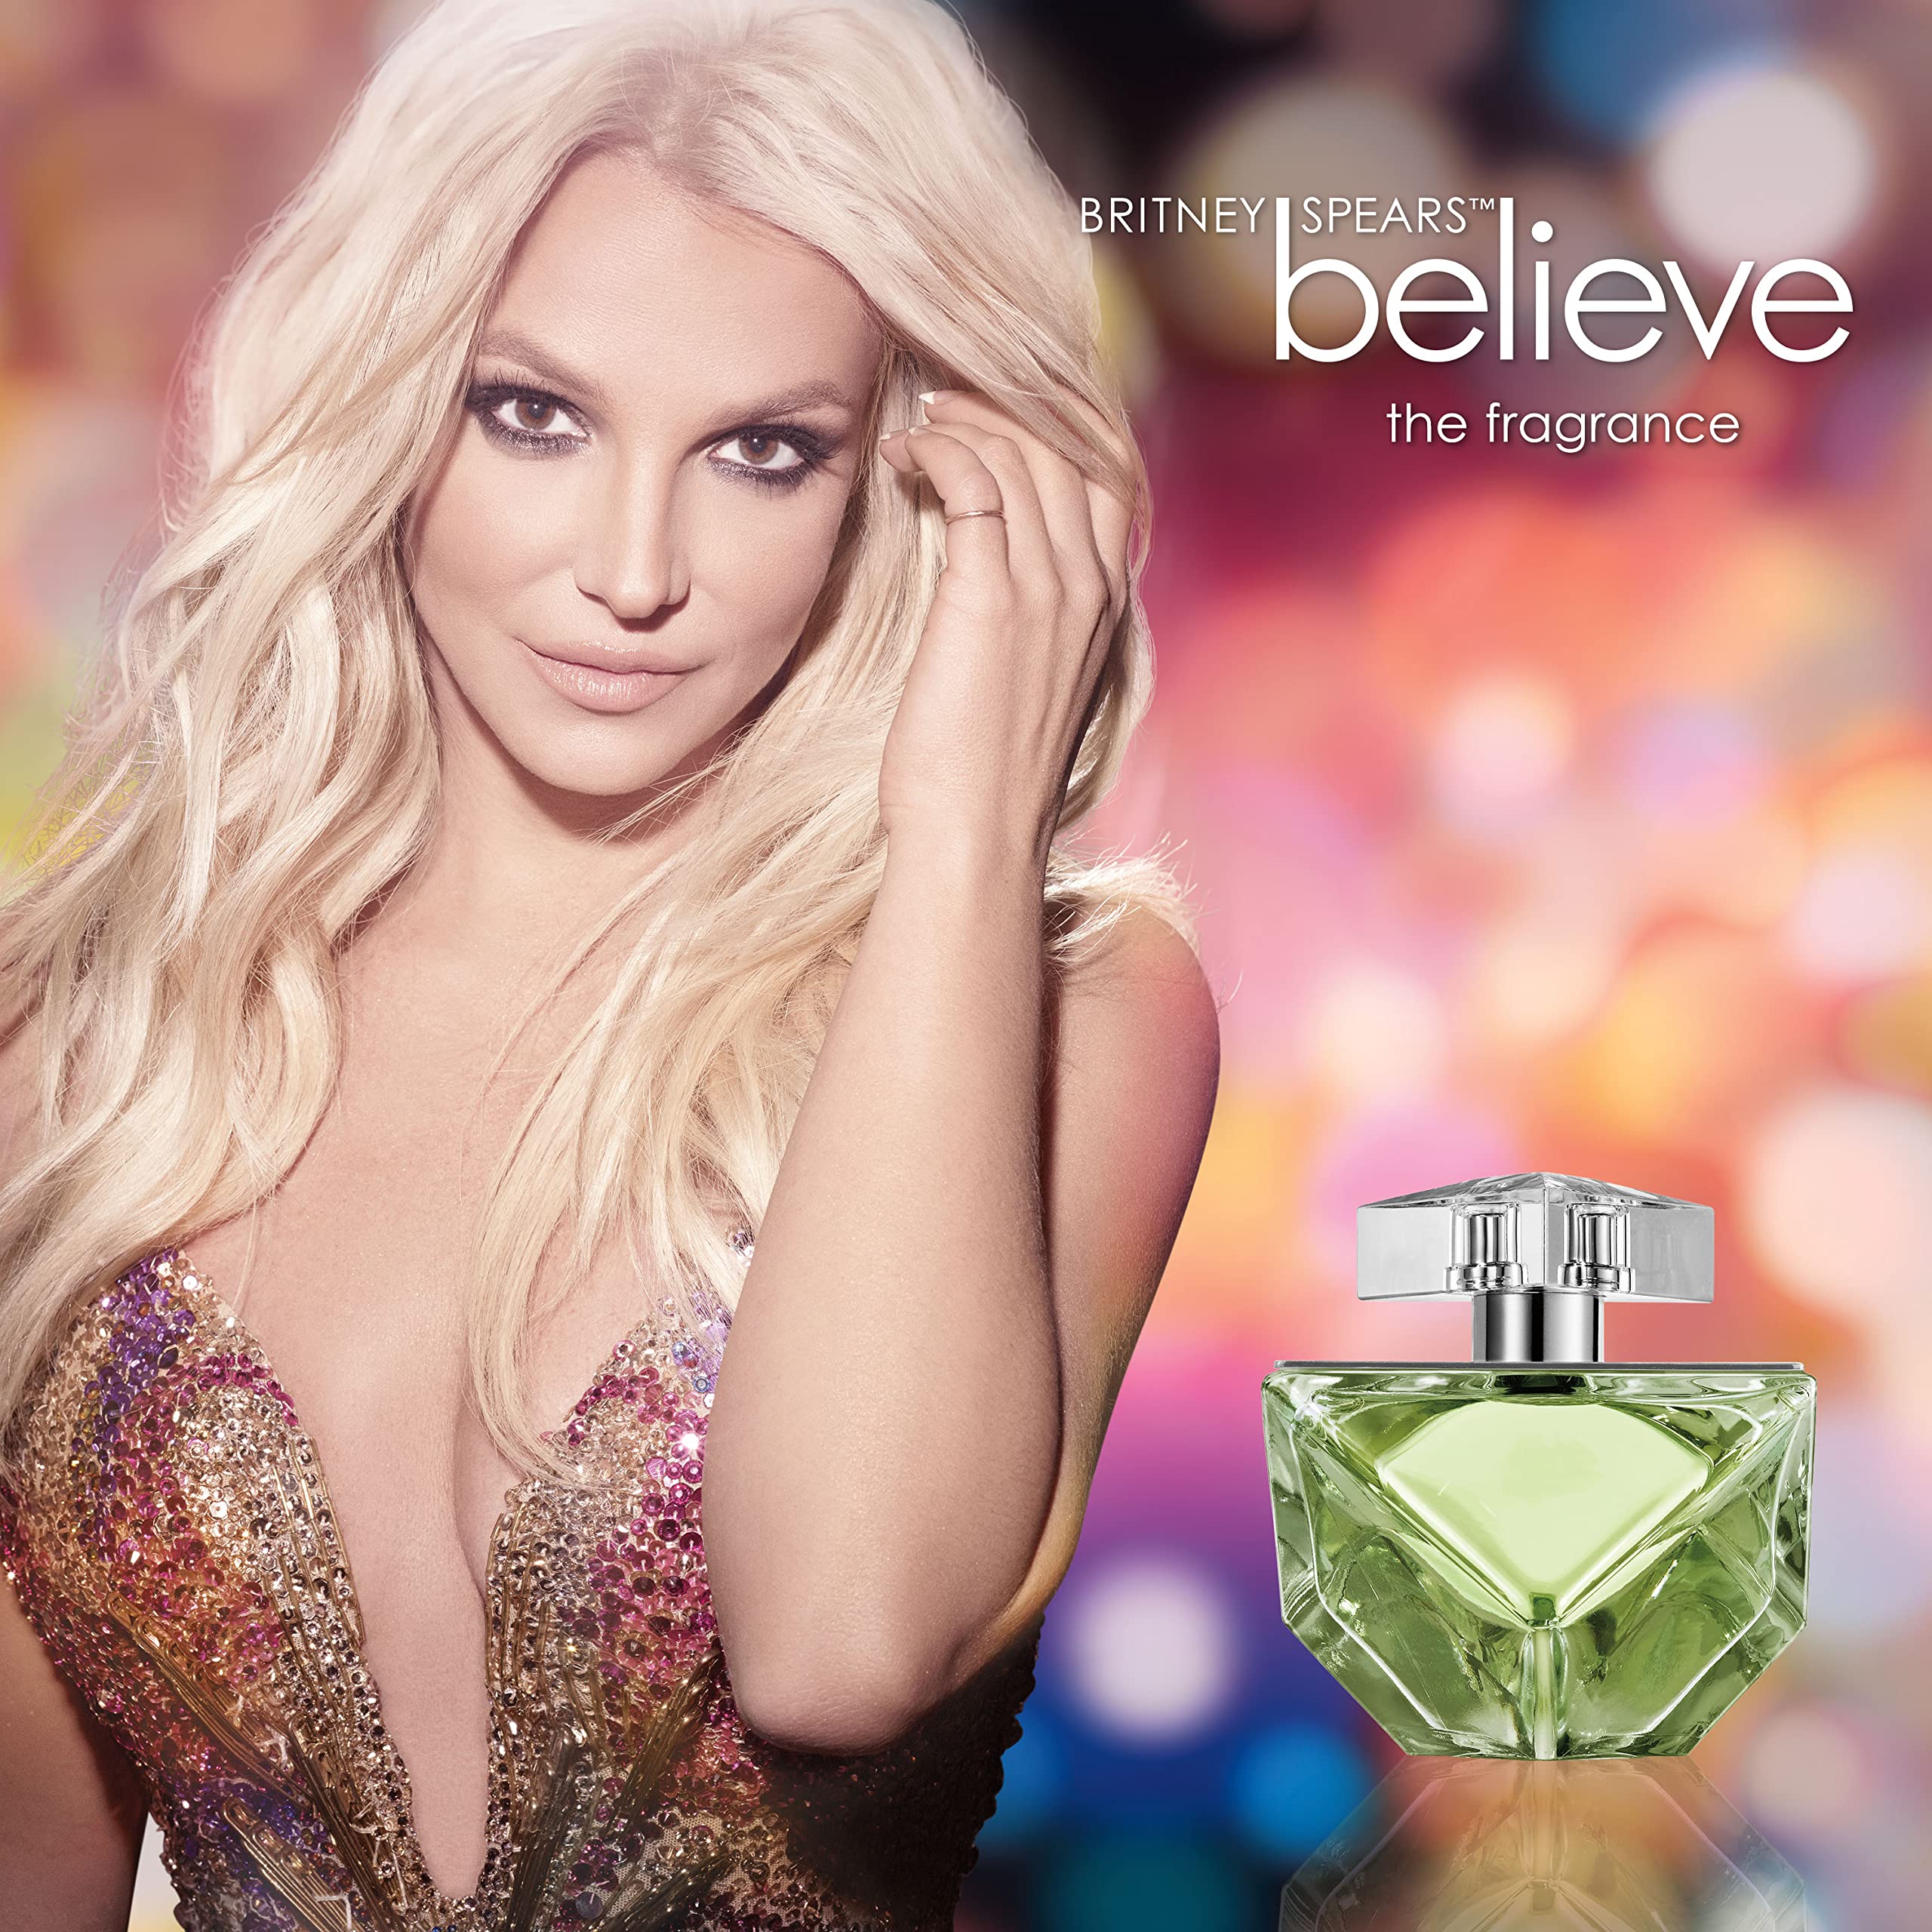 Britney Spears Believe EDP | My Perfume Shop Australia